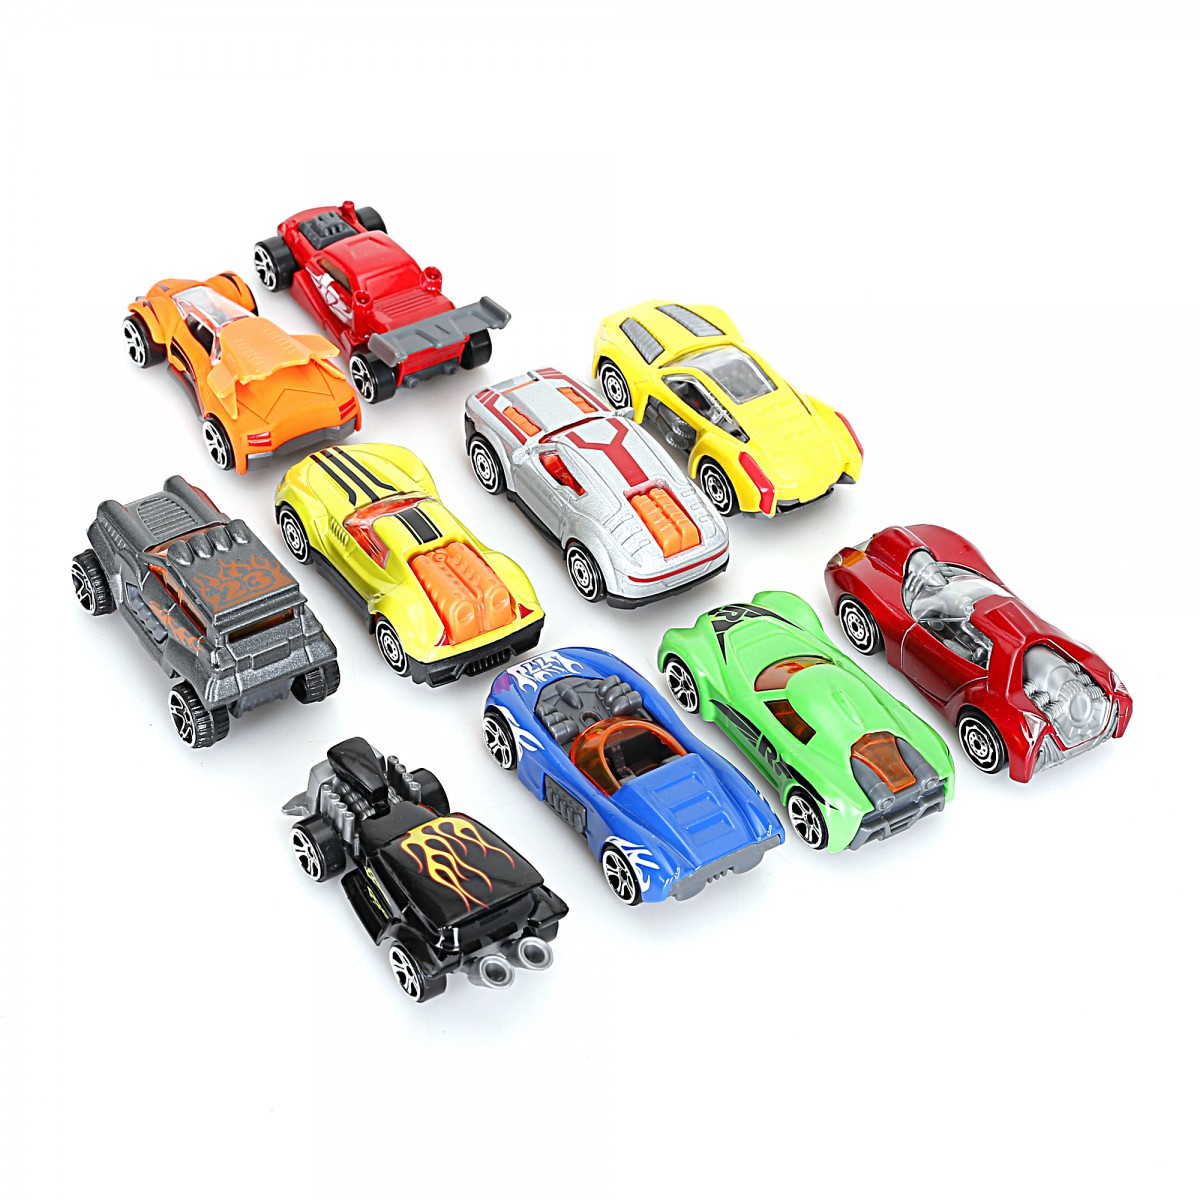 Ralleyz Pro Firefleet Street Machines Die Cast Toy Cars for Kids, Pack of 10, 3Y+